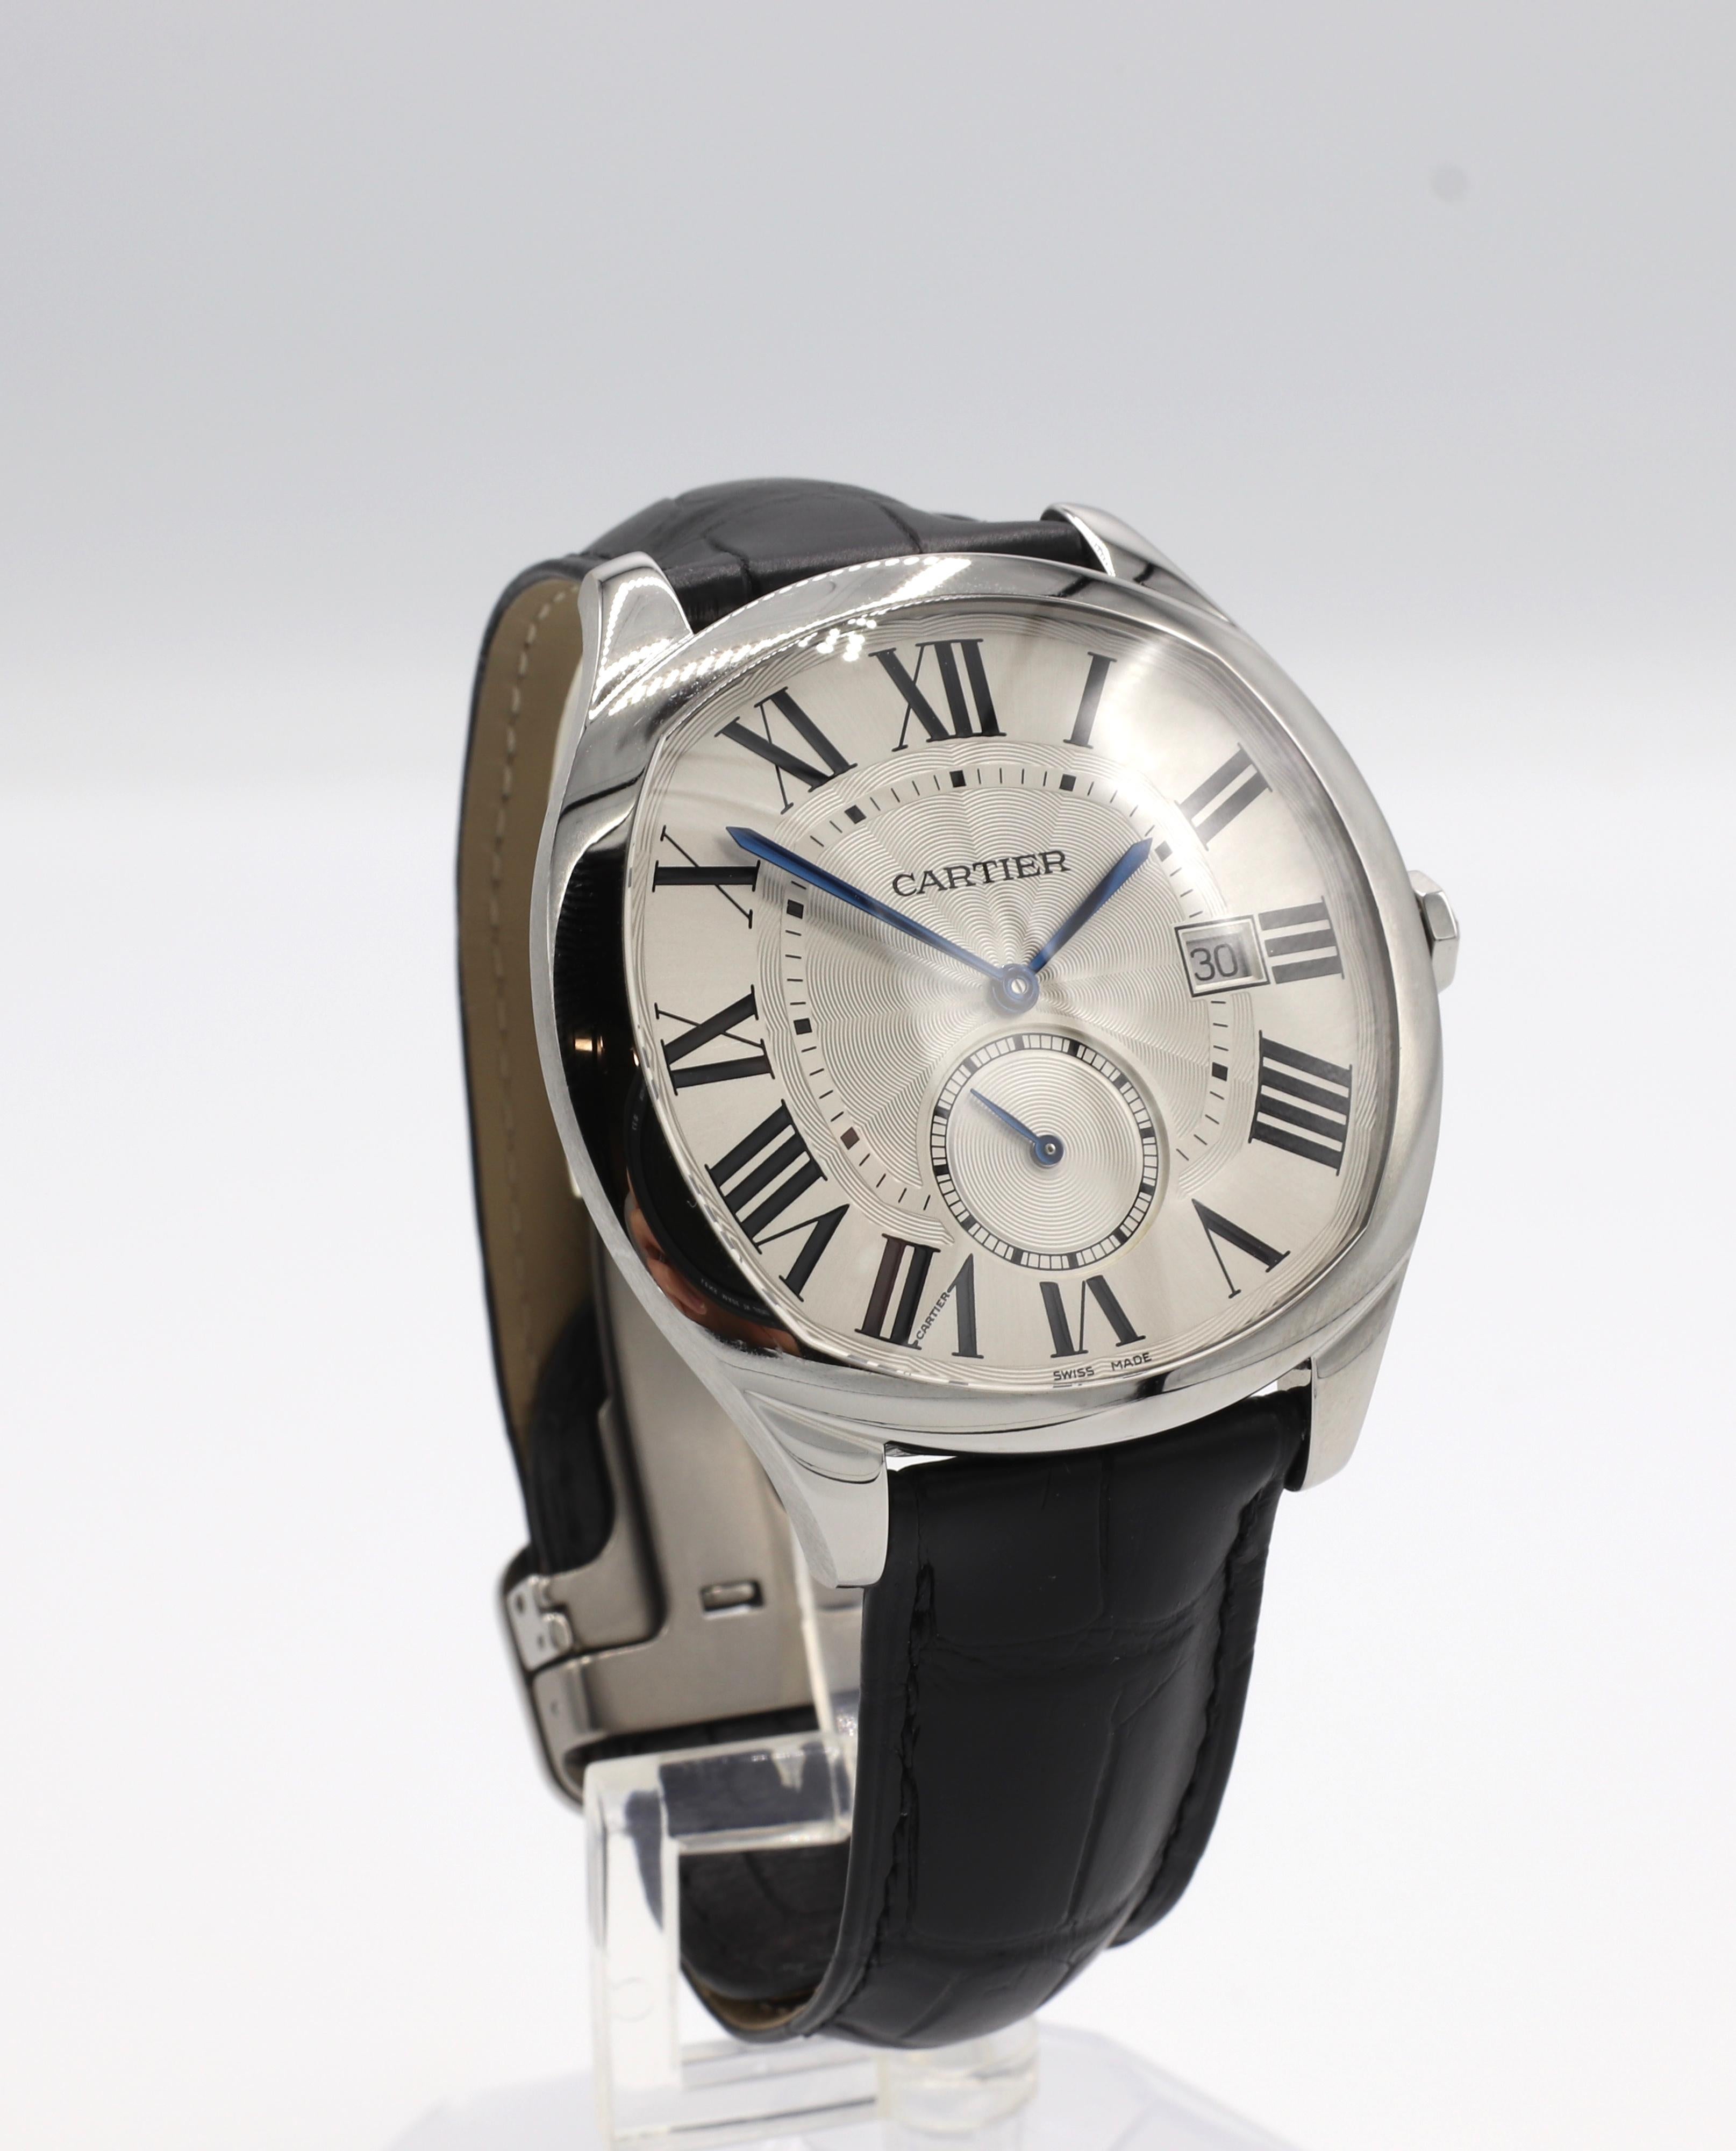 Cartier Drive De Cartier WSNM0004 Stainless Steel Leather Strap Men's Watch 7